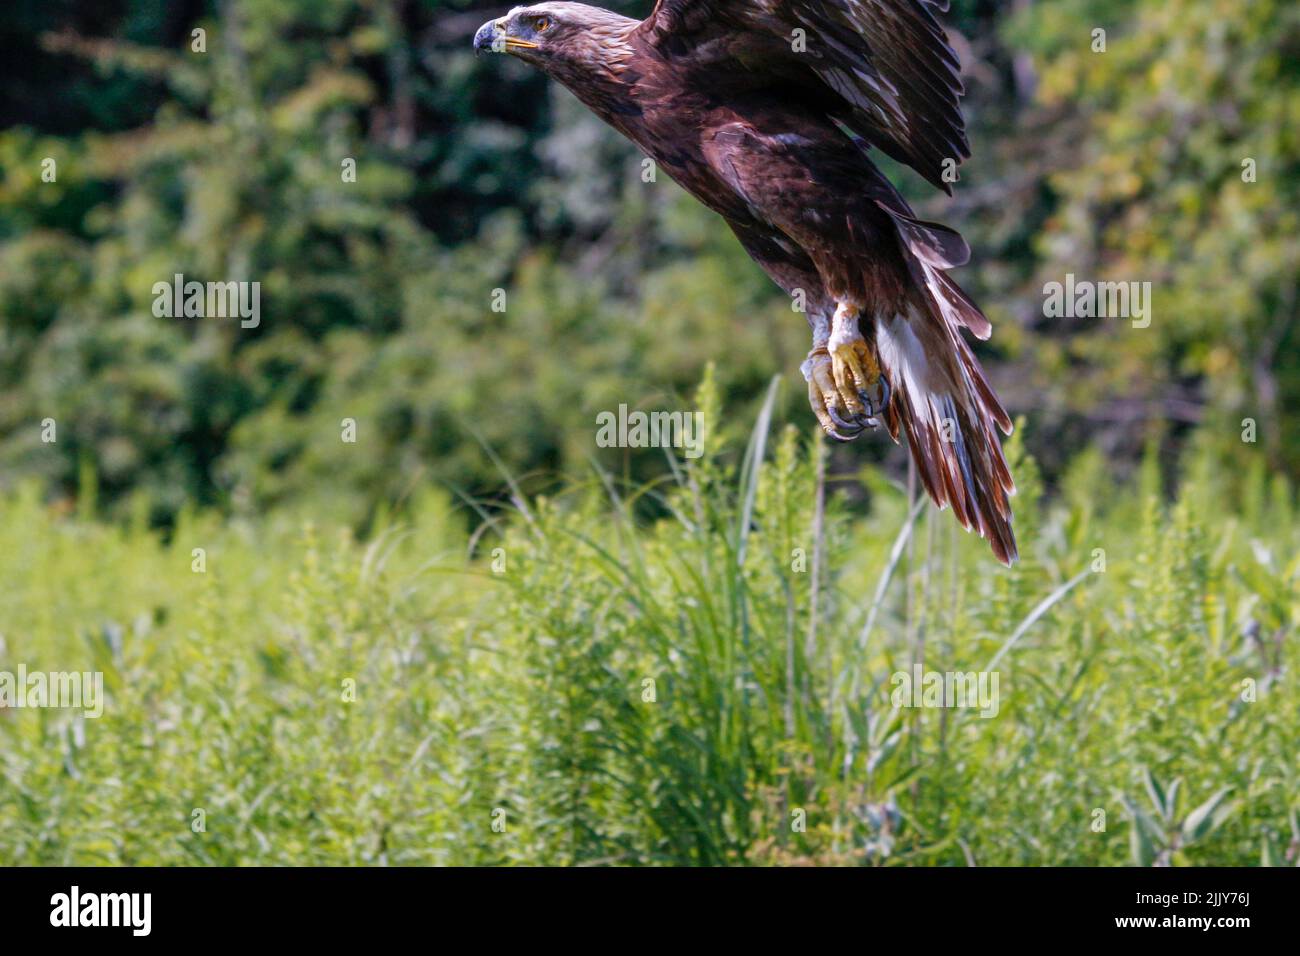 Un aigle d'or (Aquila chrysaetos) volant dans les airs. Banque D'Images